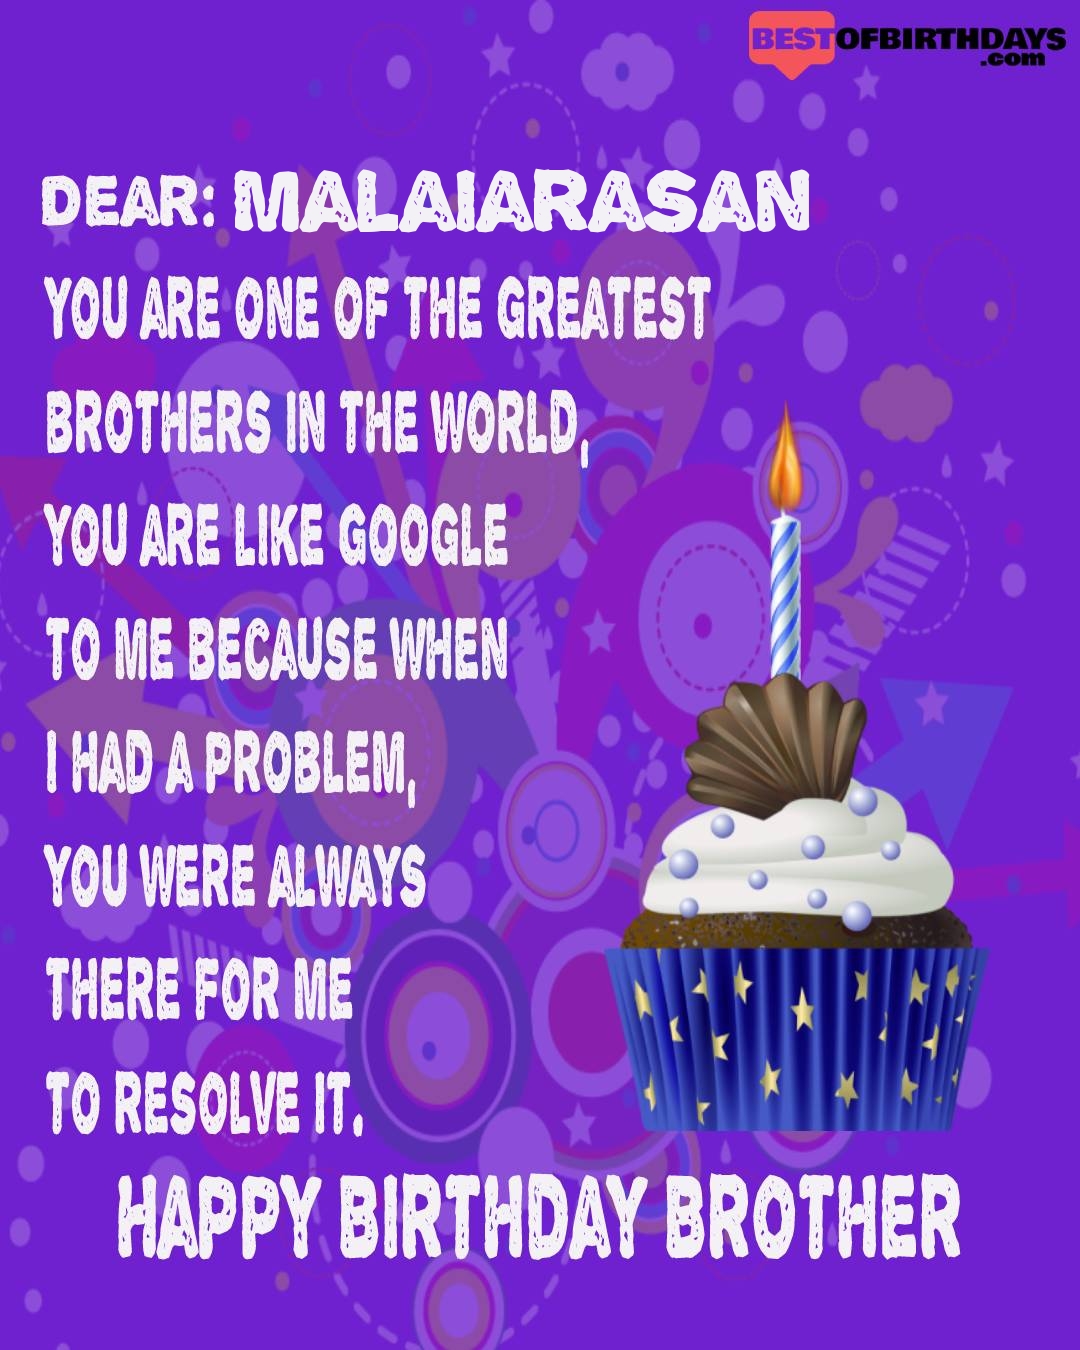 Happy birthday malaiarasan bhai brother bro